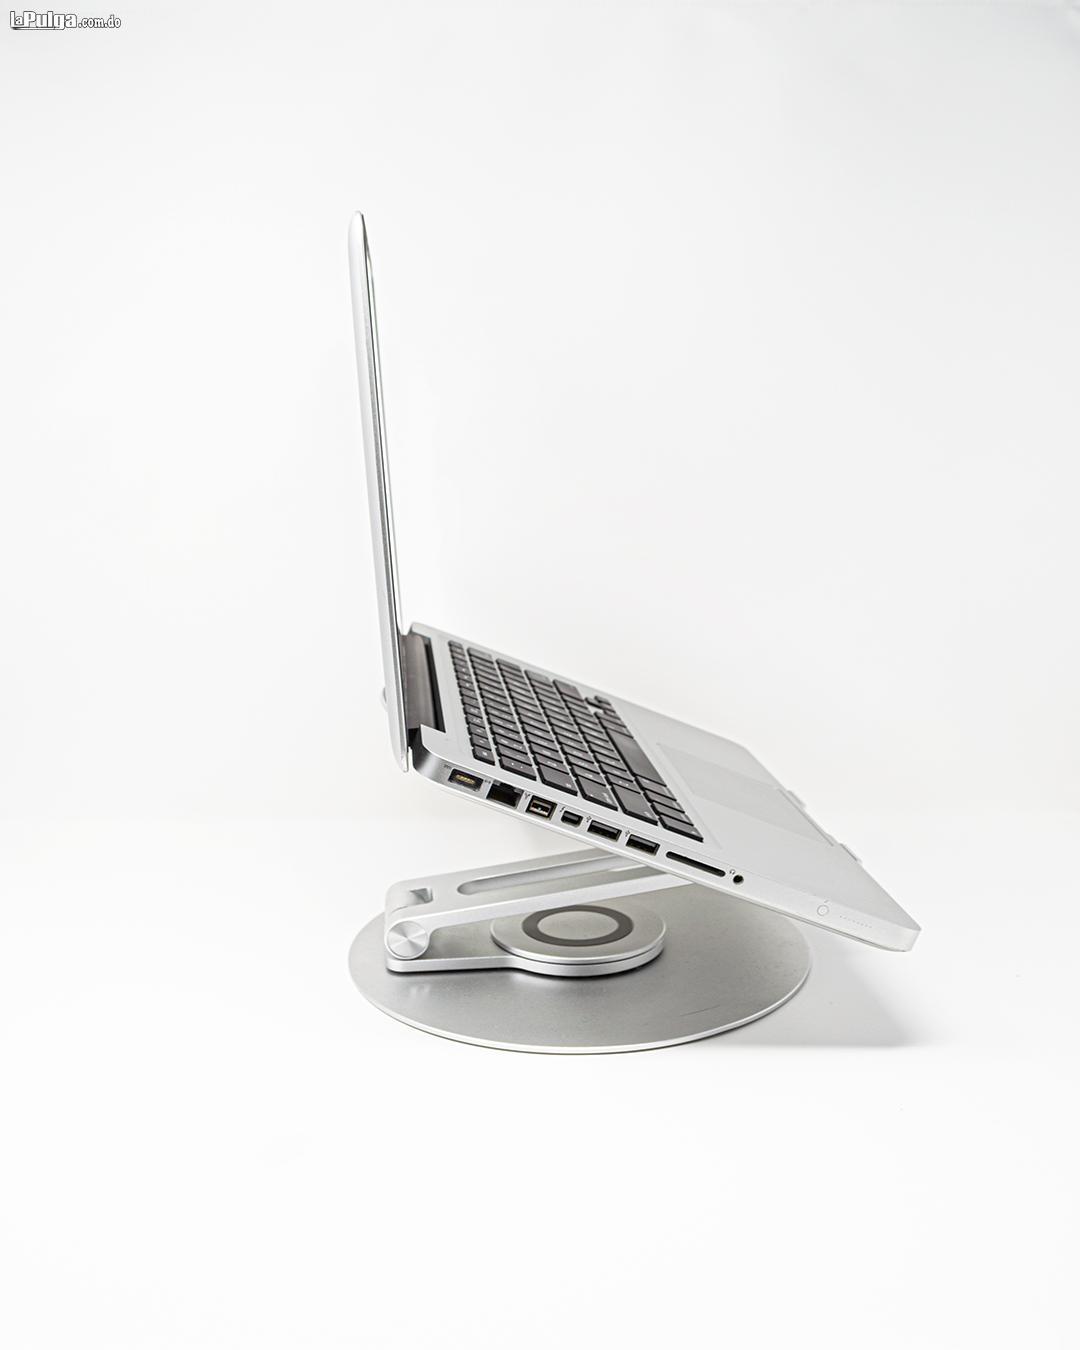 MacBook Pro 13 pulgs 2012 Foto 7130210-2.jpg